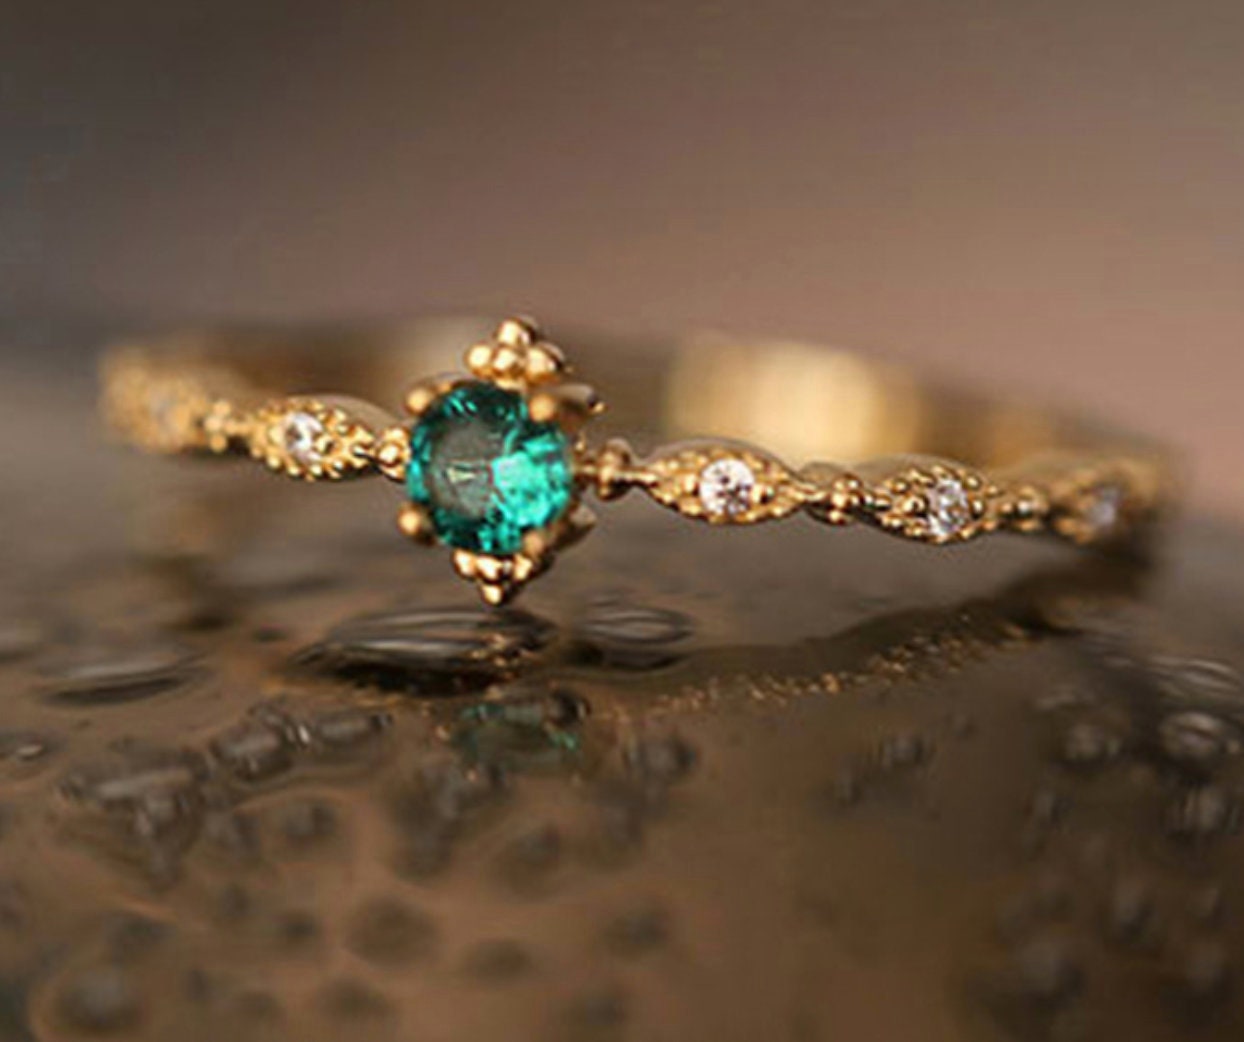 the wedding ring emerald pendant  